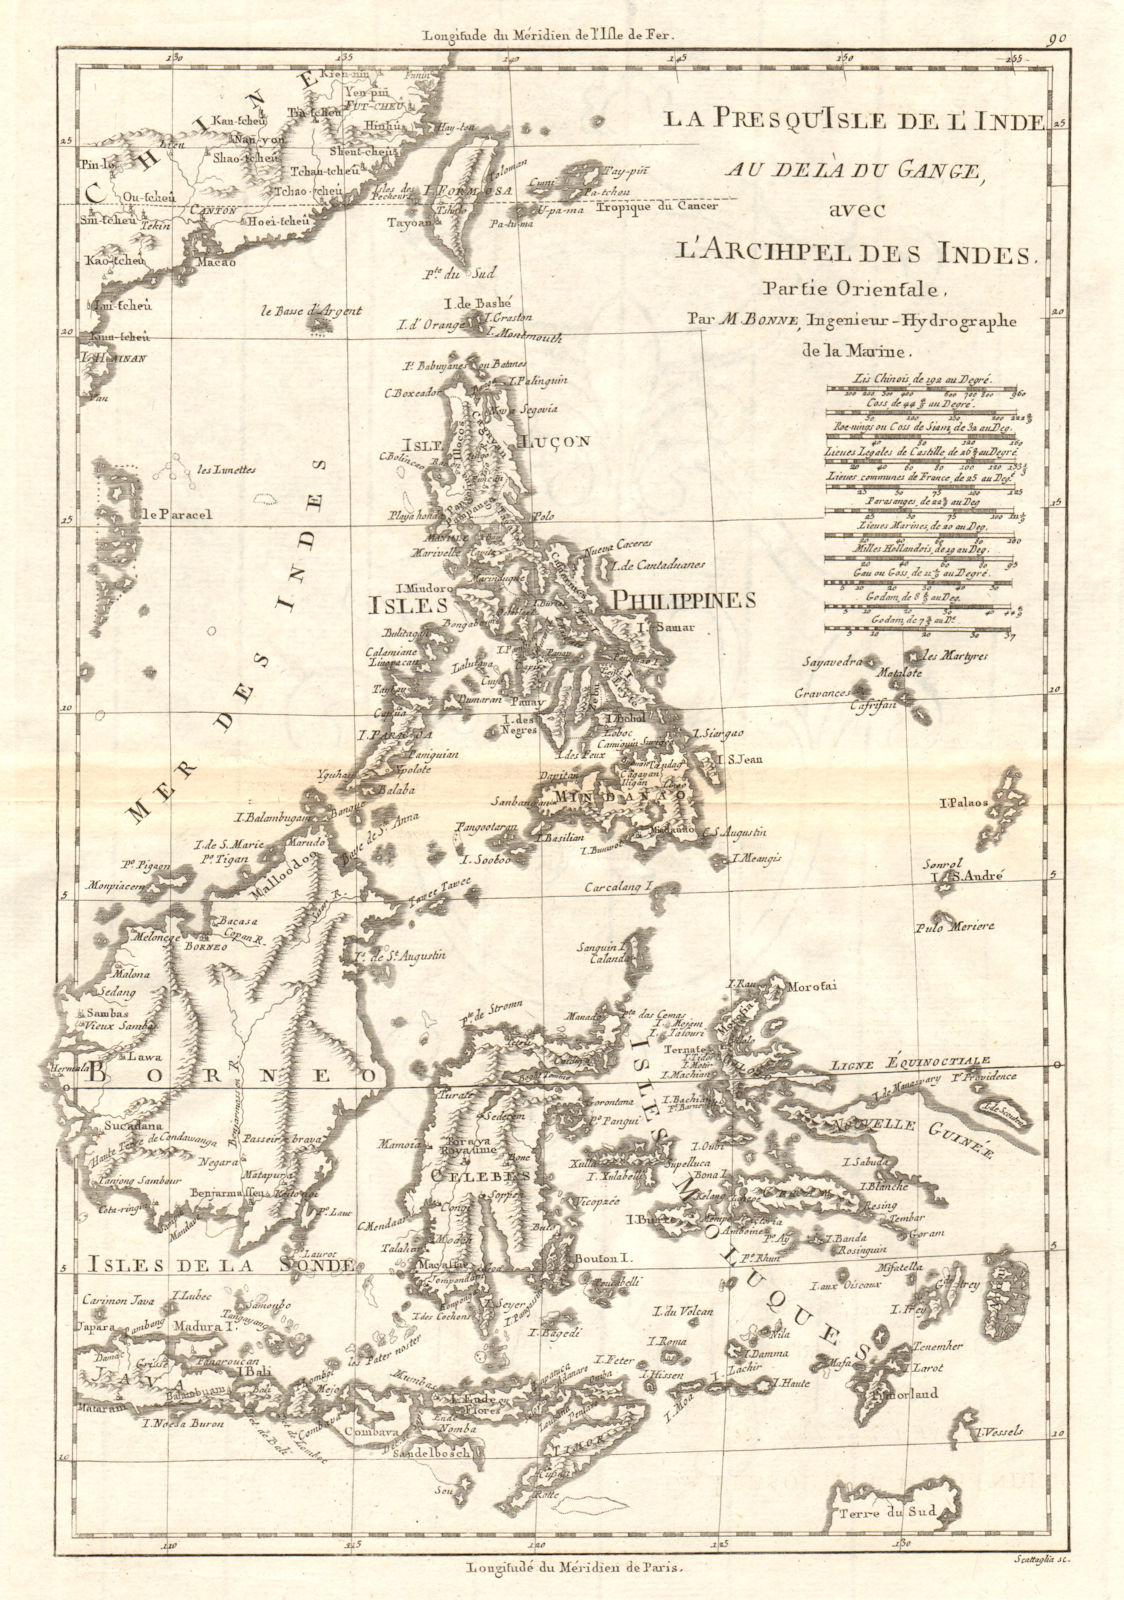 l’Archipel des Indes. East Indies Philippines Indonesia. BONNE 1790 old map